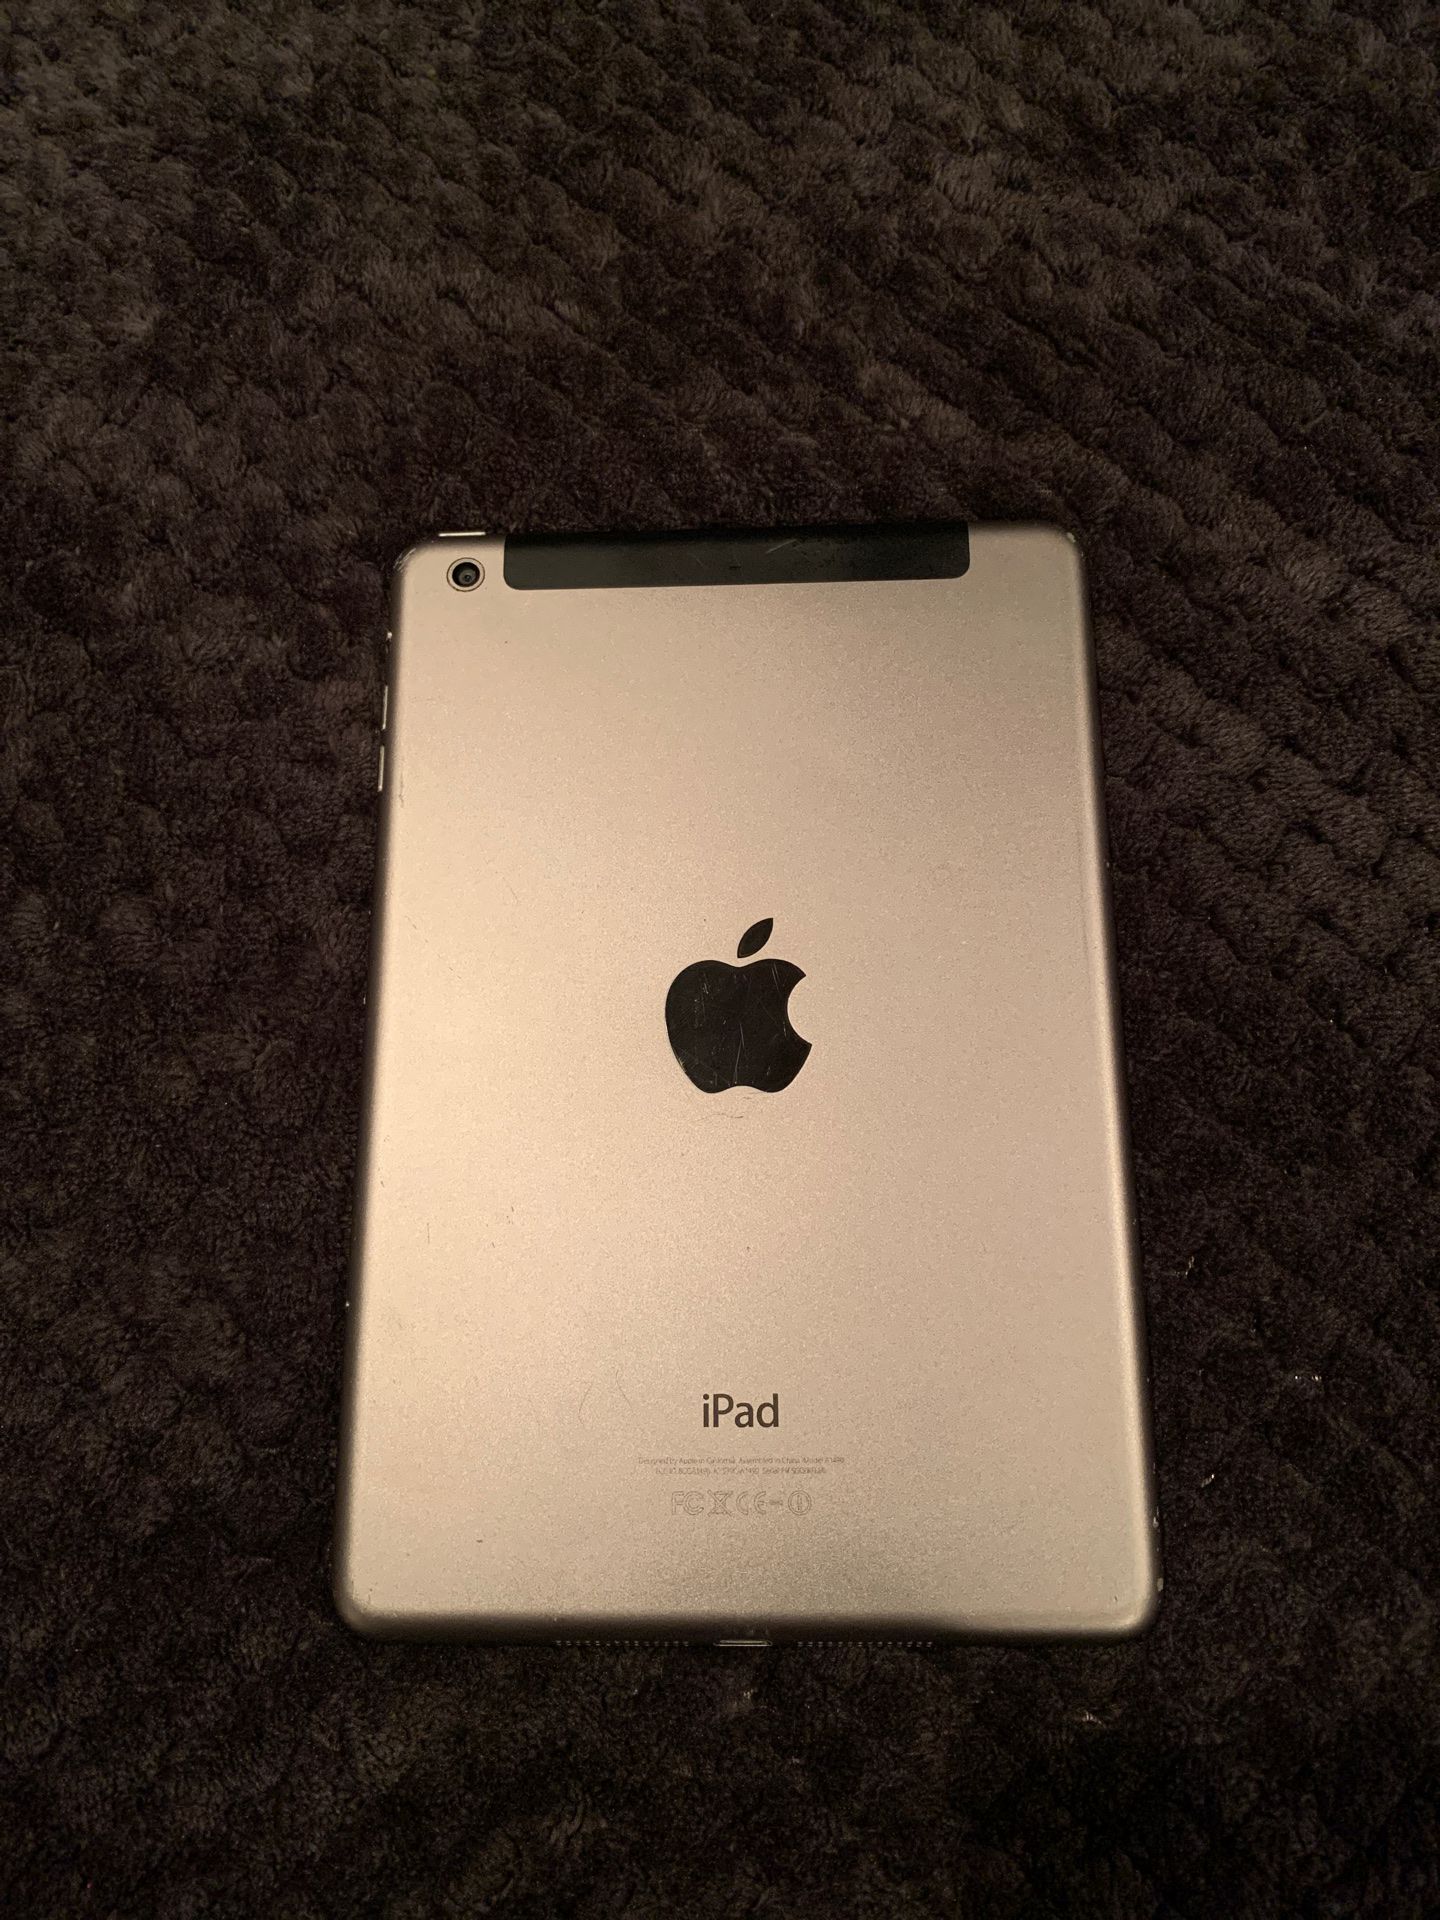 Apple - iPad mini 2 with Wi-Fi + Cellular - 32GB (ATT) - Space Gray